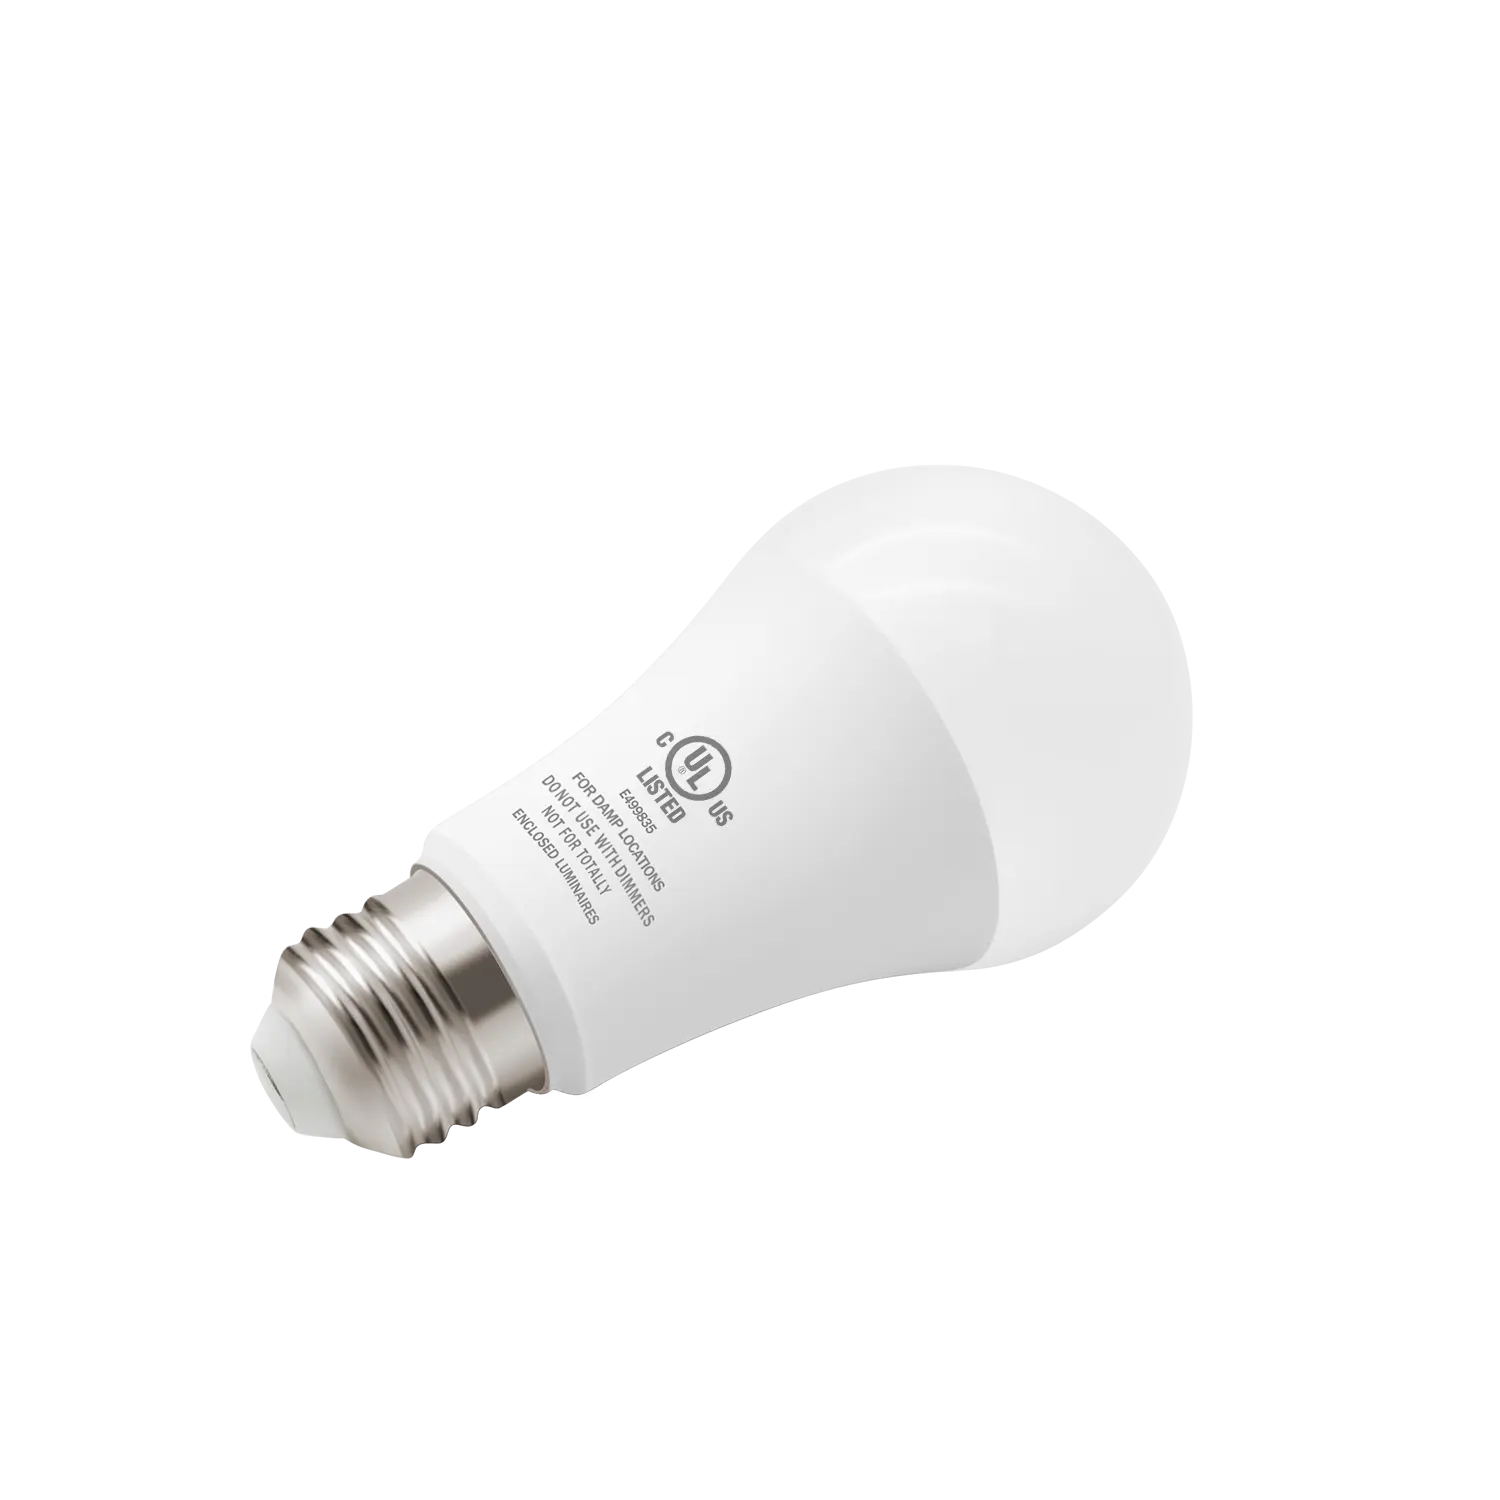 Auto Sensor Motion Sensor LED Bulb 8W 800LM E26 E27 B22 Daylight Soft White Security Light